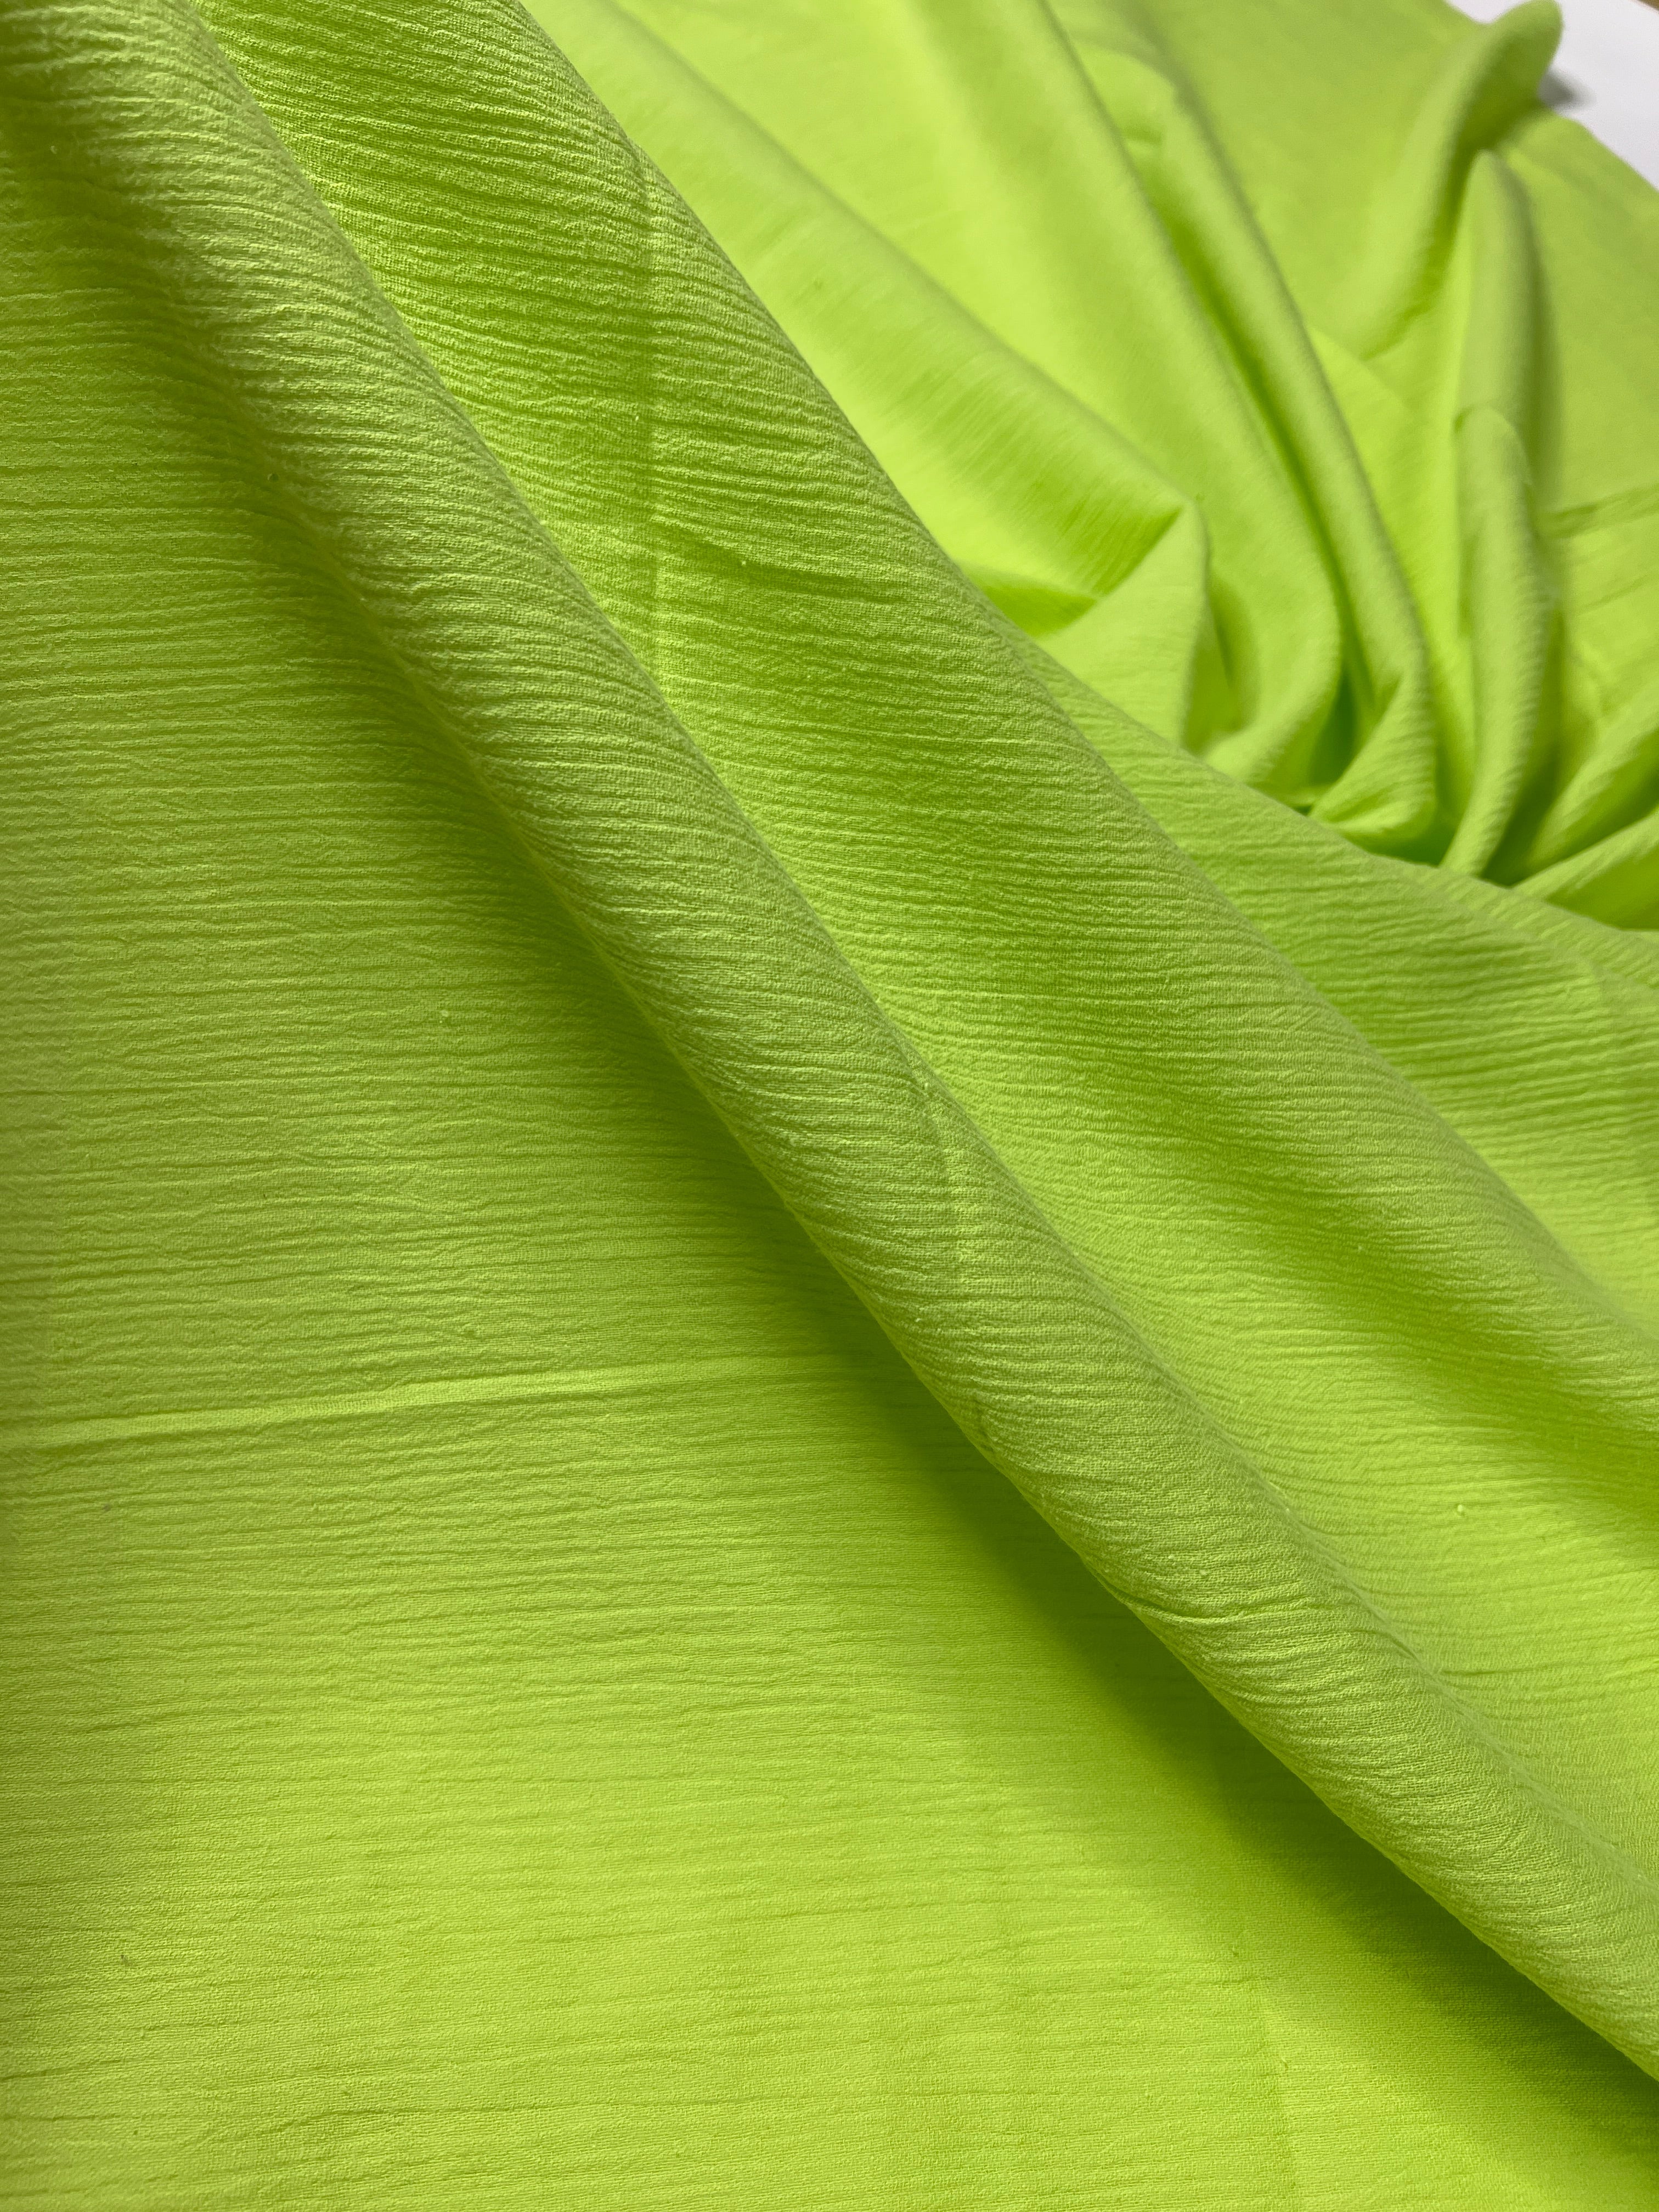 Neon Green Cotton Gauze, cotton gauze fabric, green gauze fabric, dark green gauze, cotton for woman, double gauze light green, coton gauze for bride, cotton gauze in low price